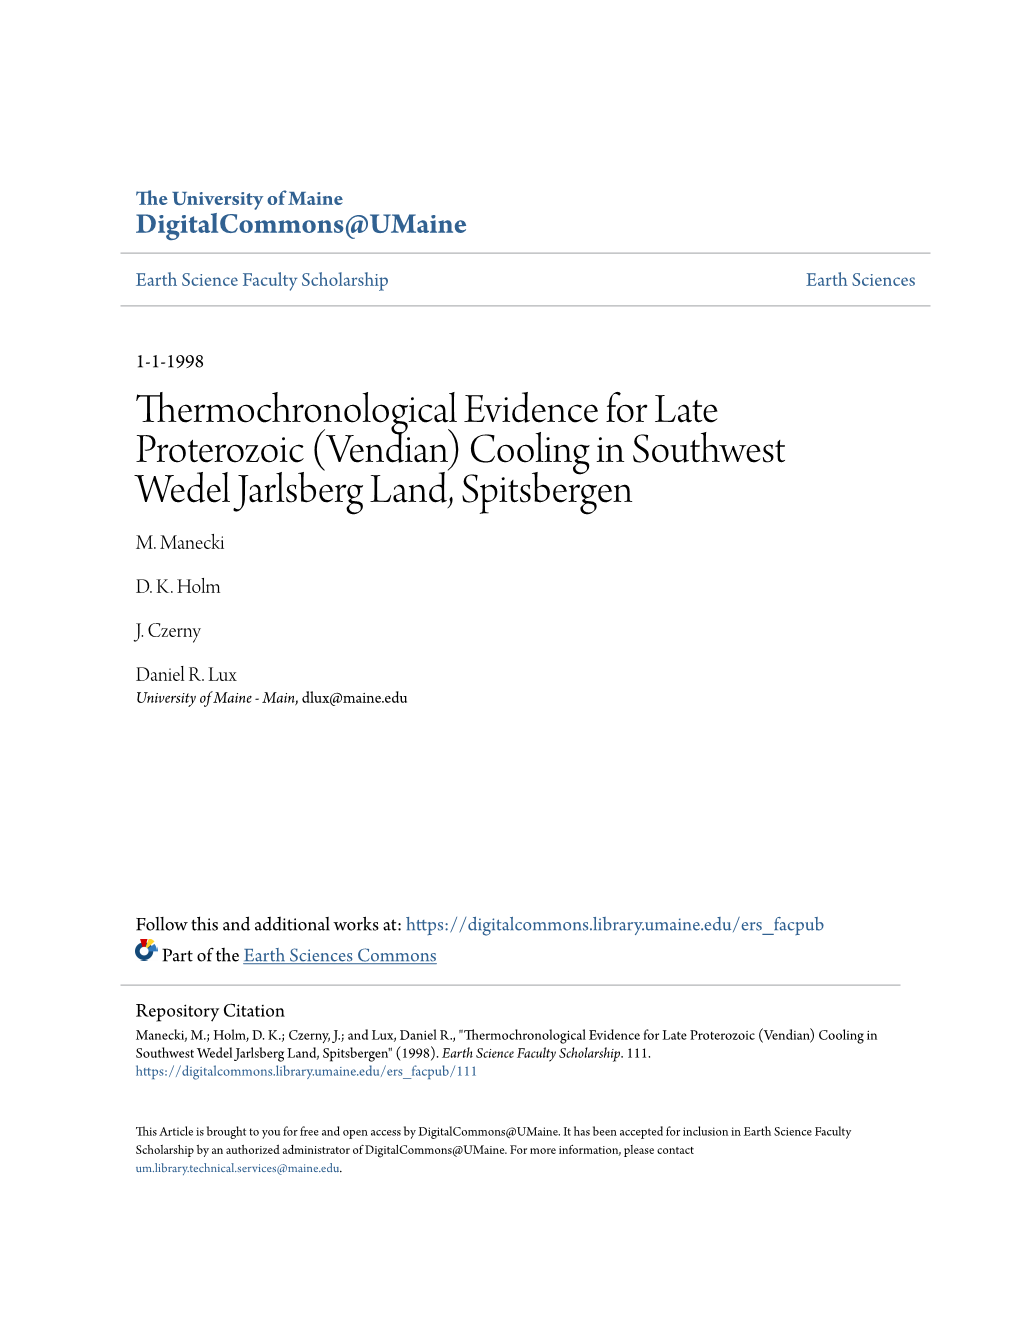 Thermochronological Evidence for Late Proterozoic (Vendian) Cooling in Southwest Wedel Jarlsberg Land, Spitsbergen M